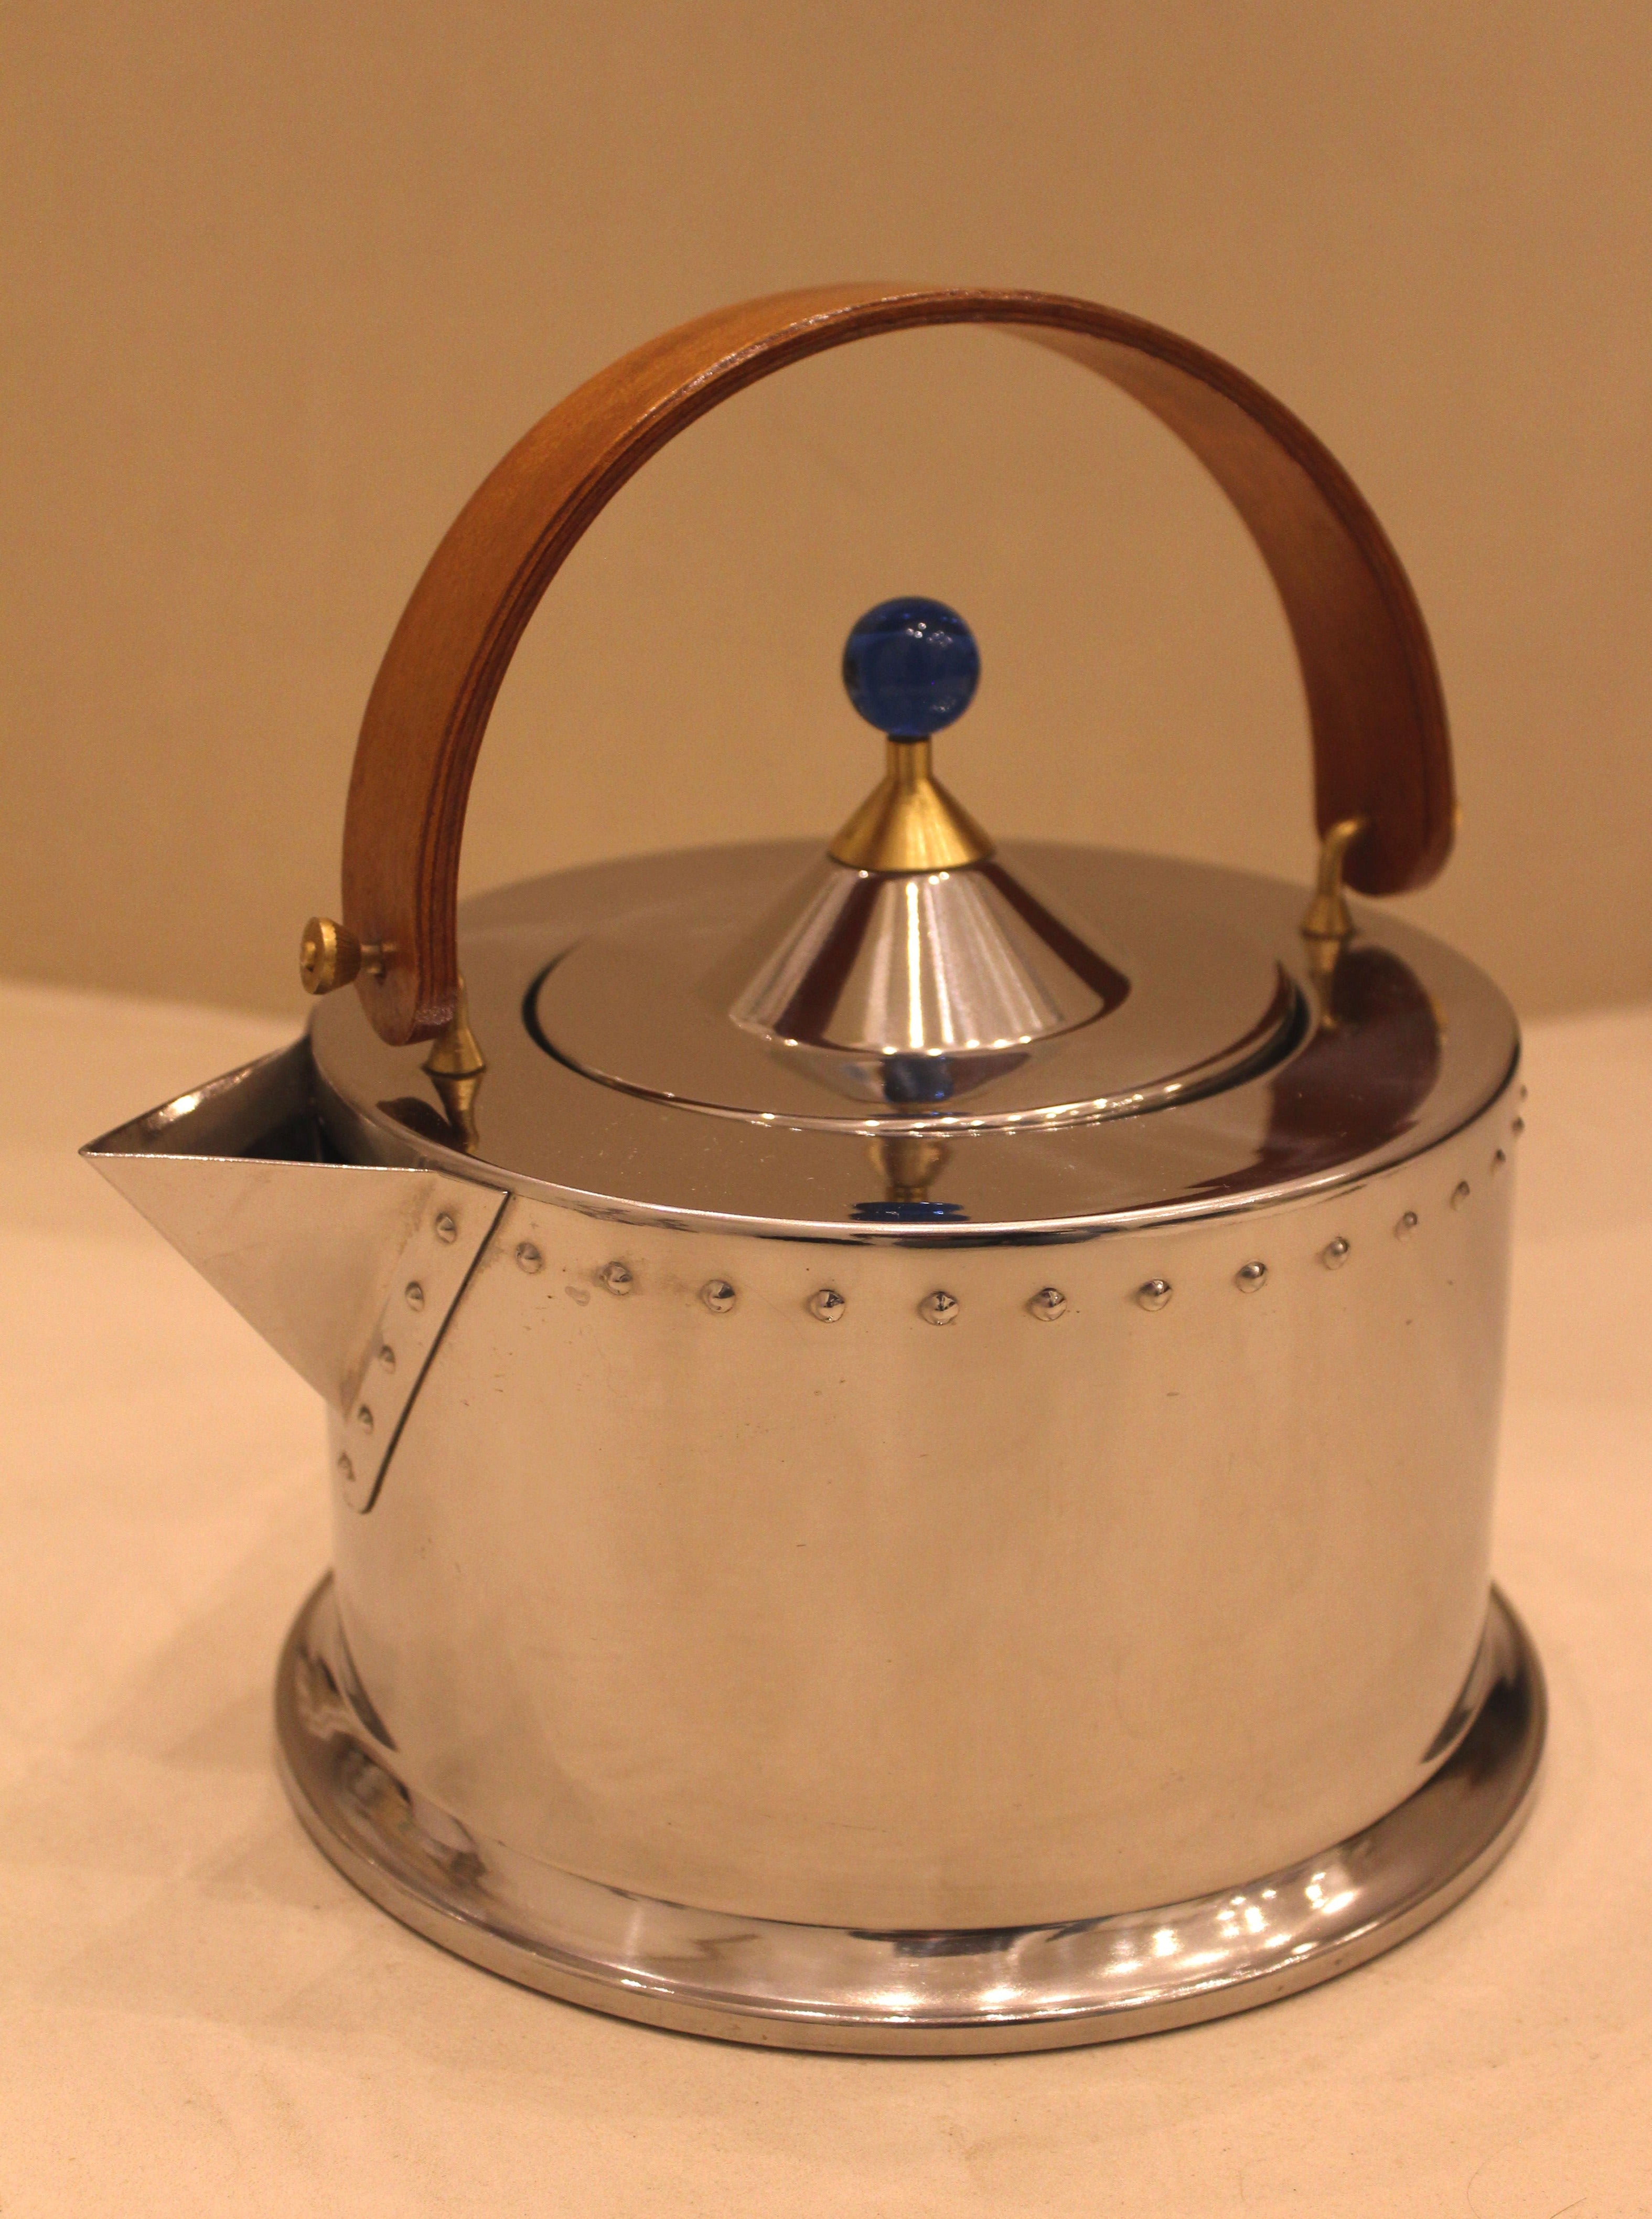 Beautiful Ottoni teapot by Carsten Jörgensen for Bodum in 1986.